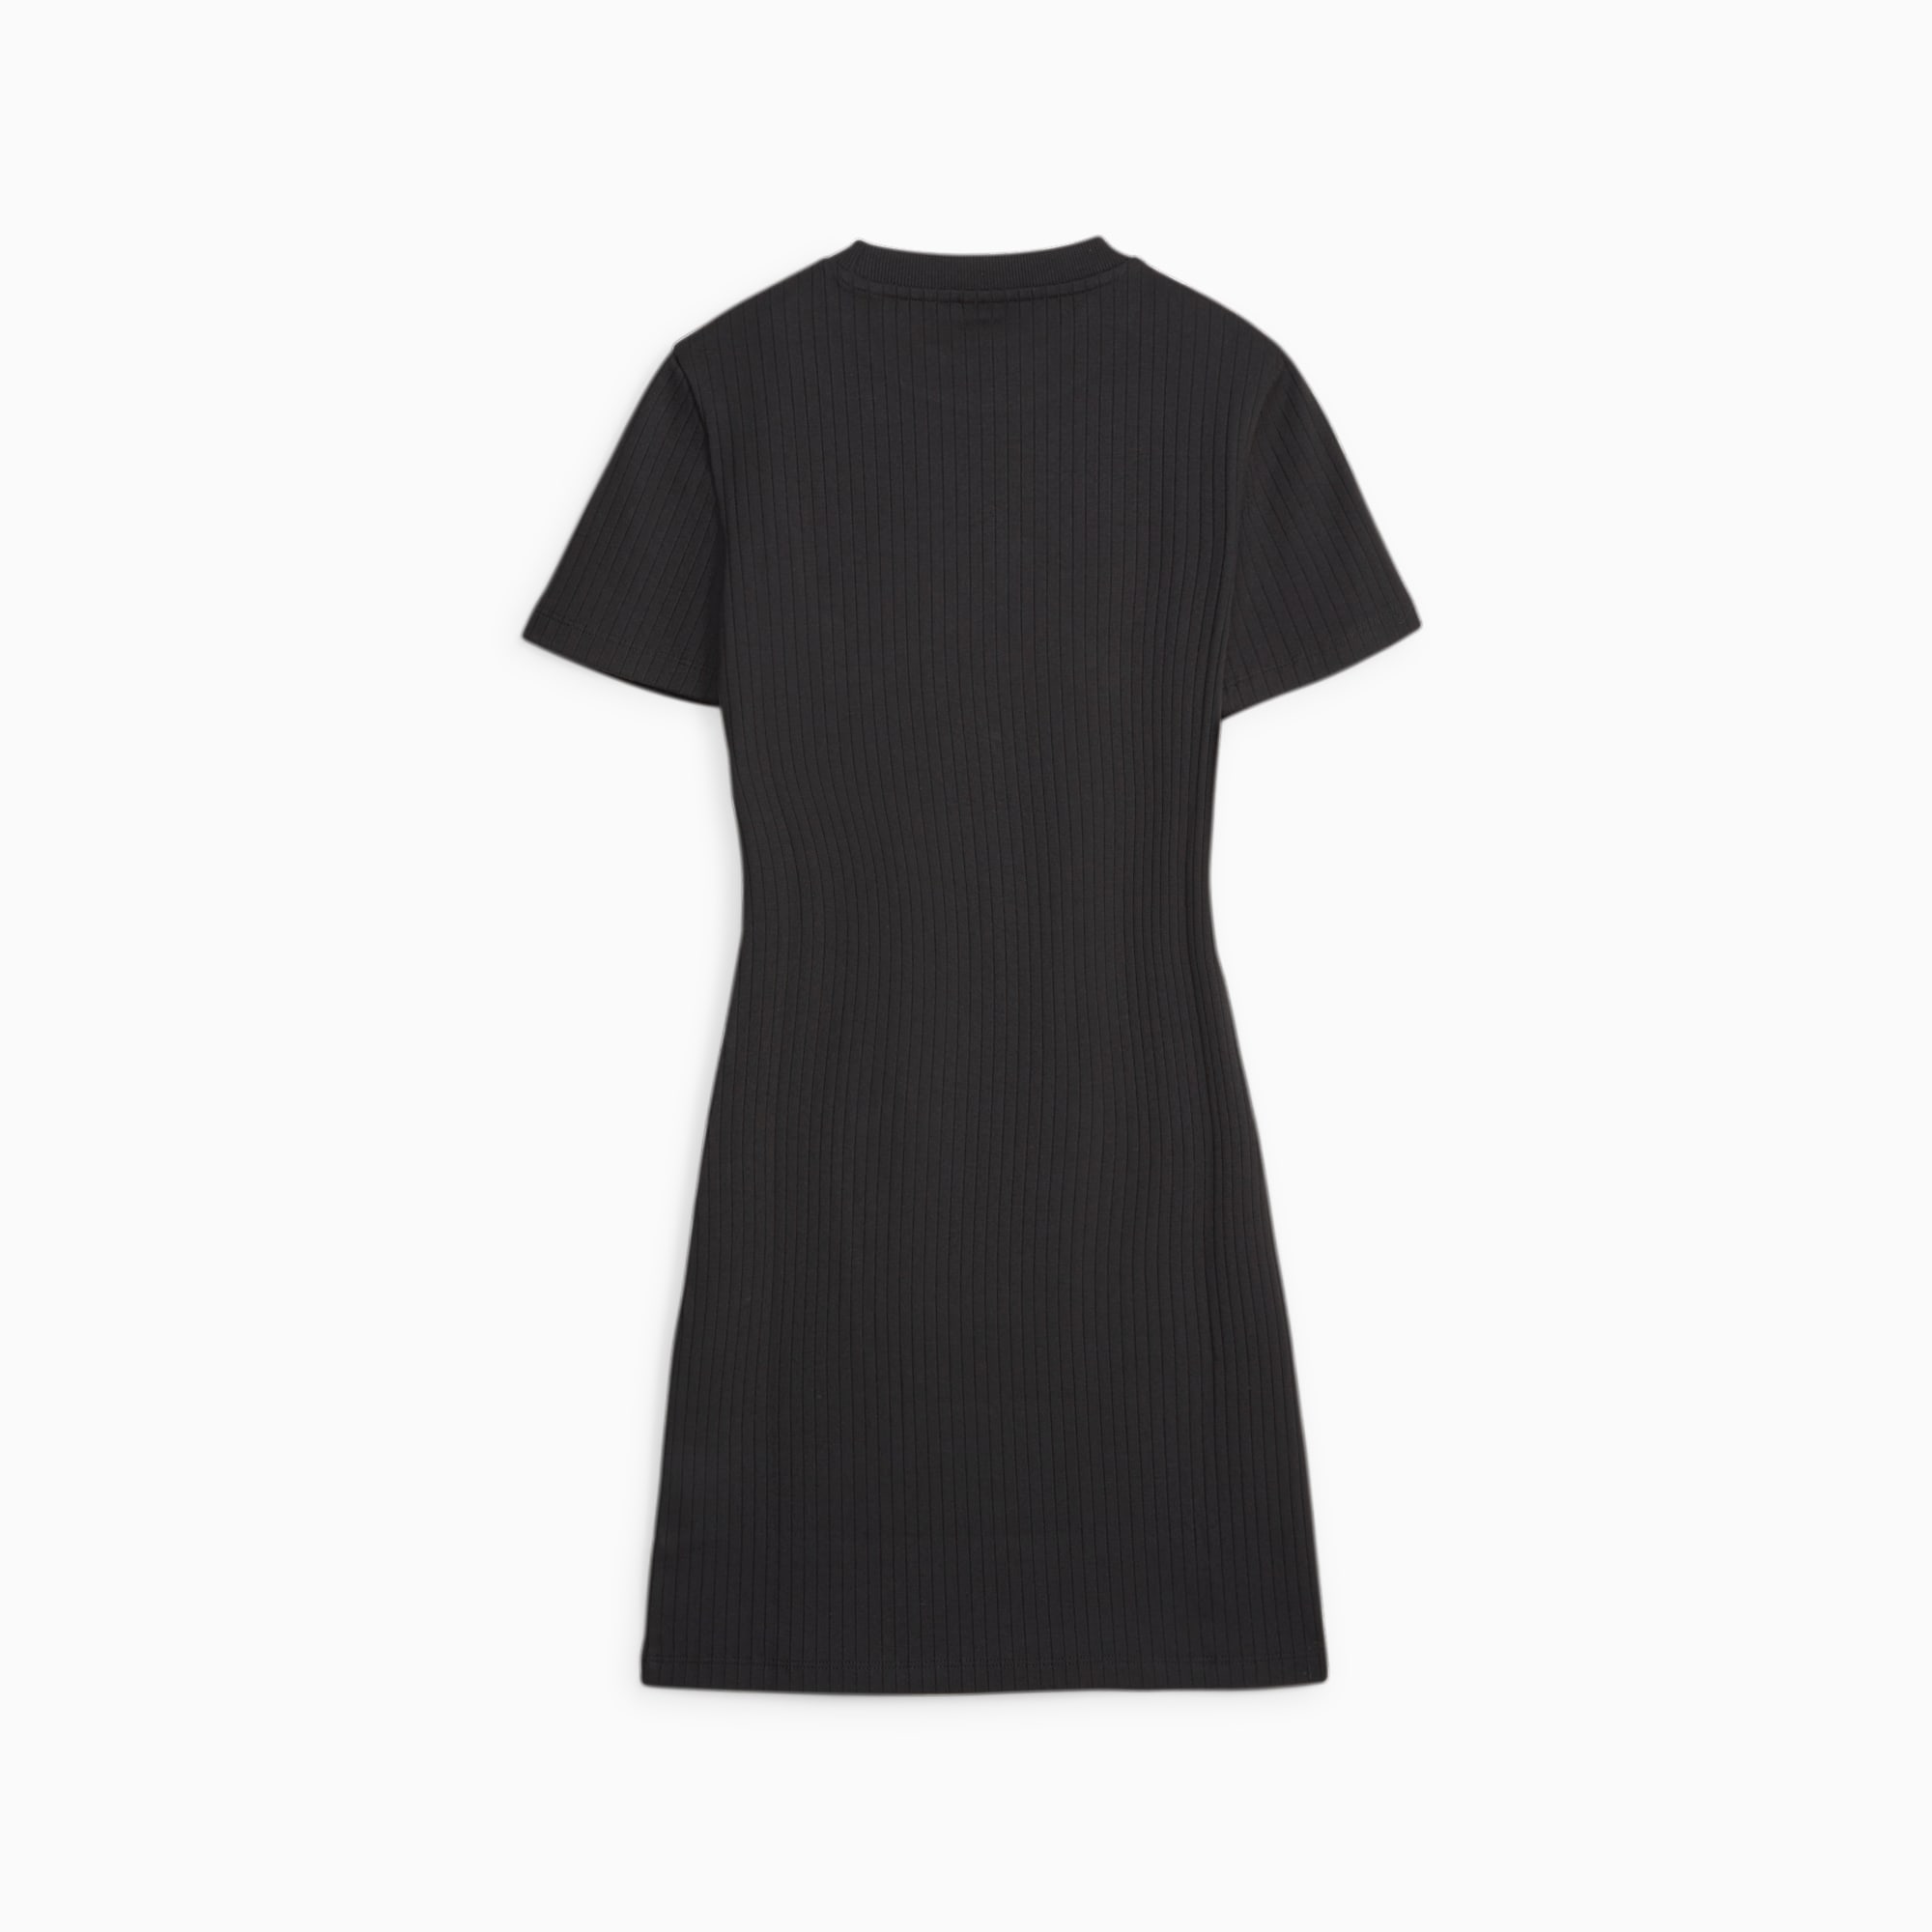 PUMA Classics Women's Ribbed Dress, Black, Size S, Clothing